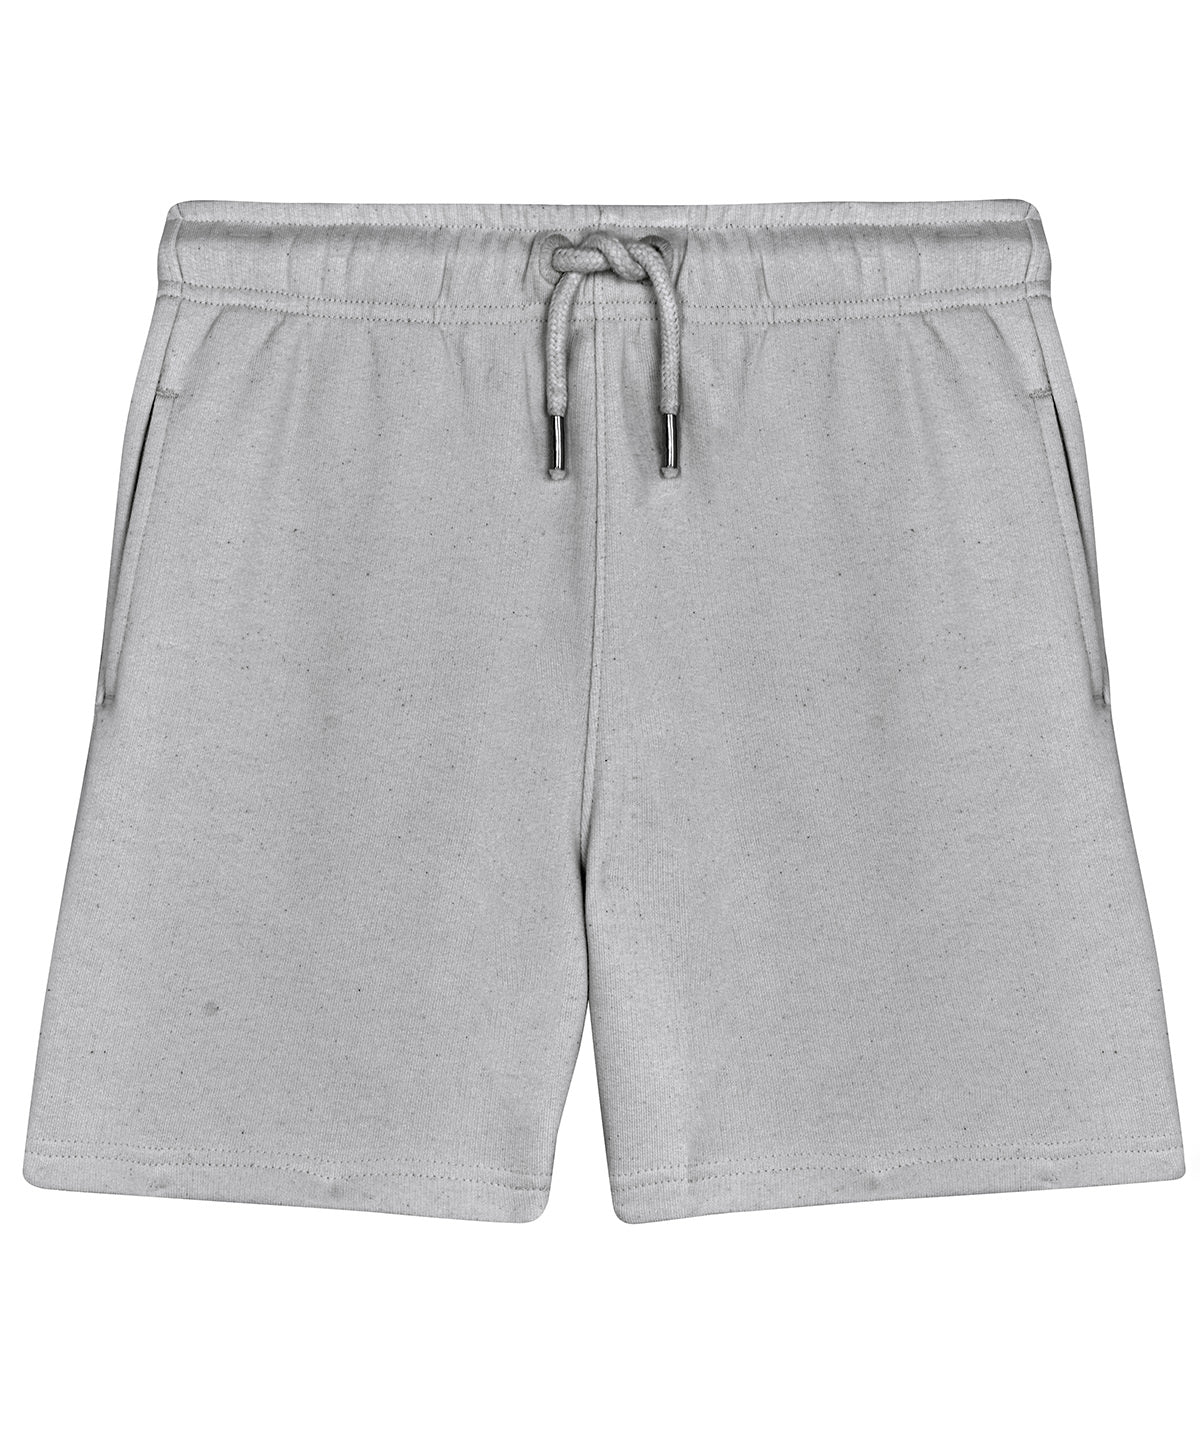 Mini Bolter kids shorts (STBK102)